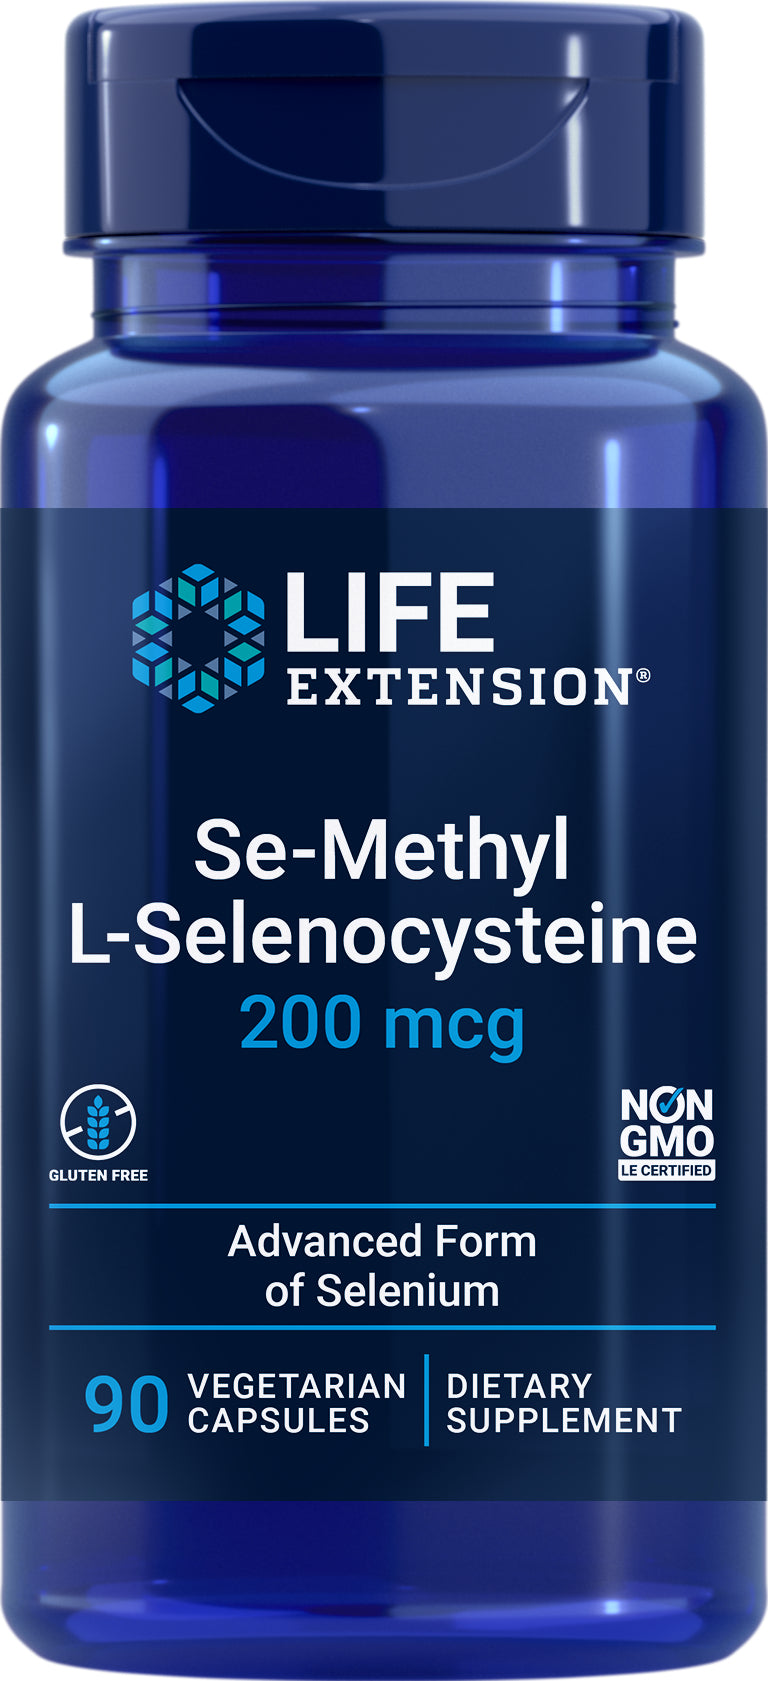 Se-Methyl L-Selenocysteine 200 mcg, 90 veg caps by Life Extension